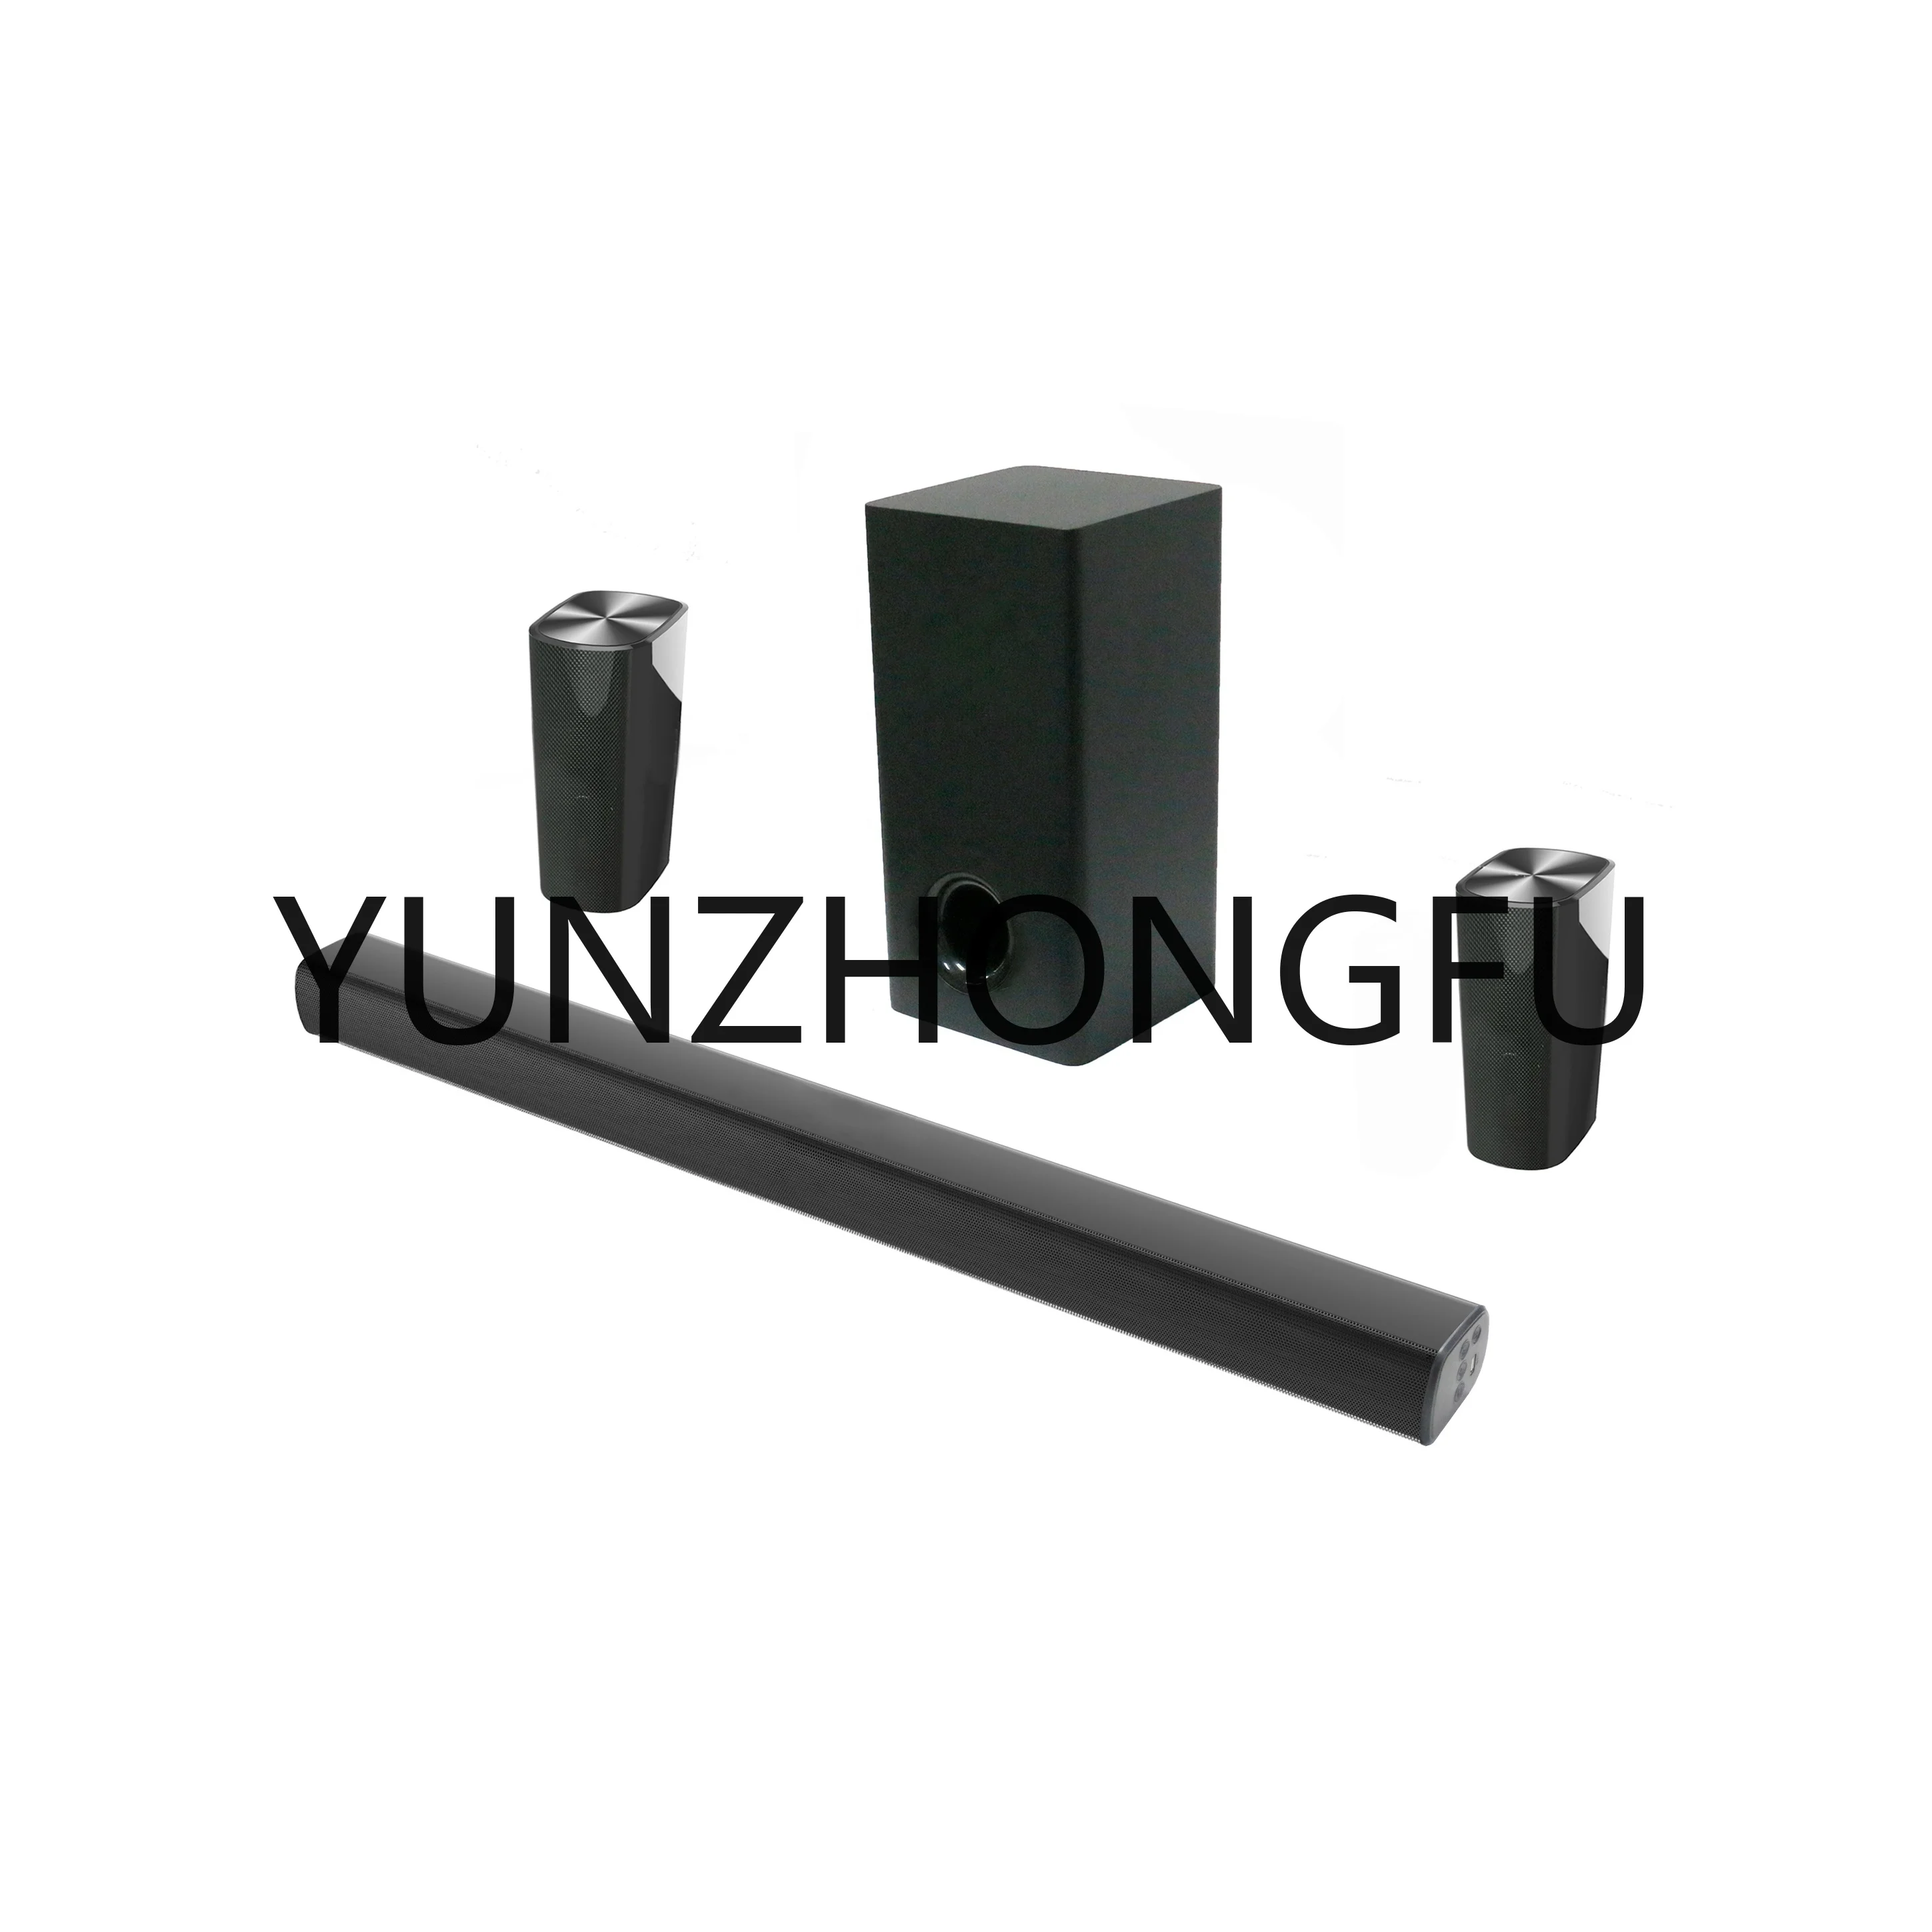 

TV Theater 125W Home Audio Soundbar Speaker 5.1 Wireless Bluetooth Surround Sound Bar With Subwoofer Home Theatre System